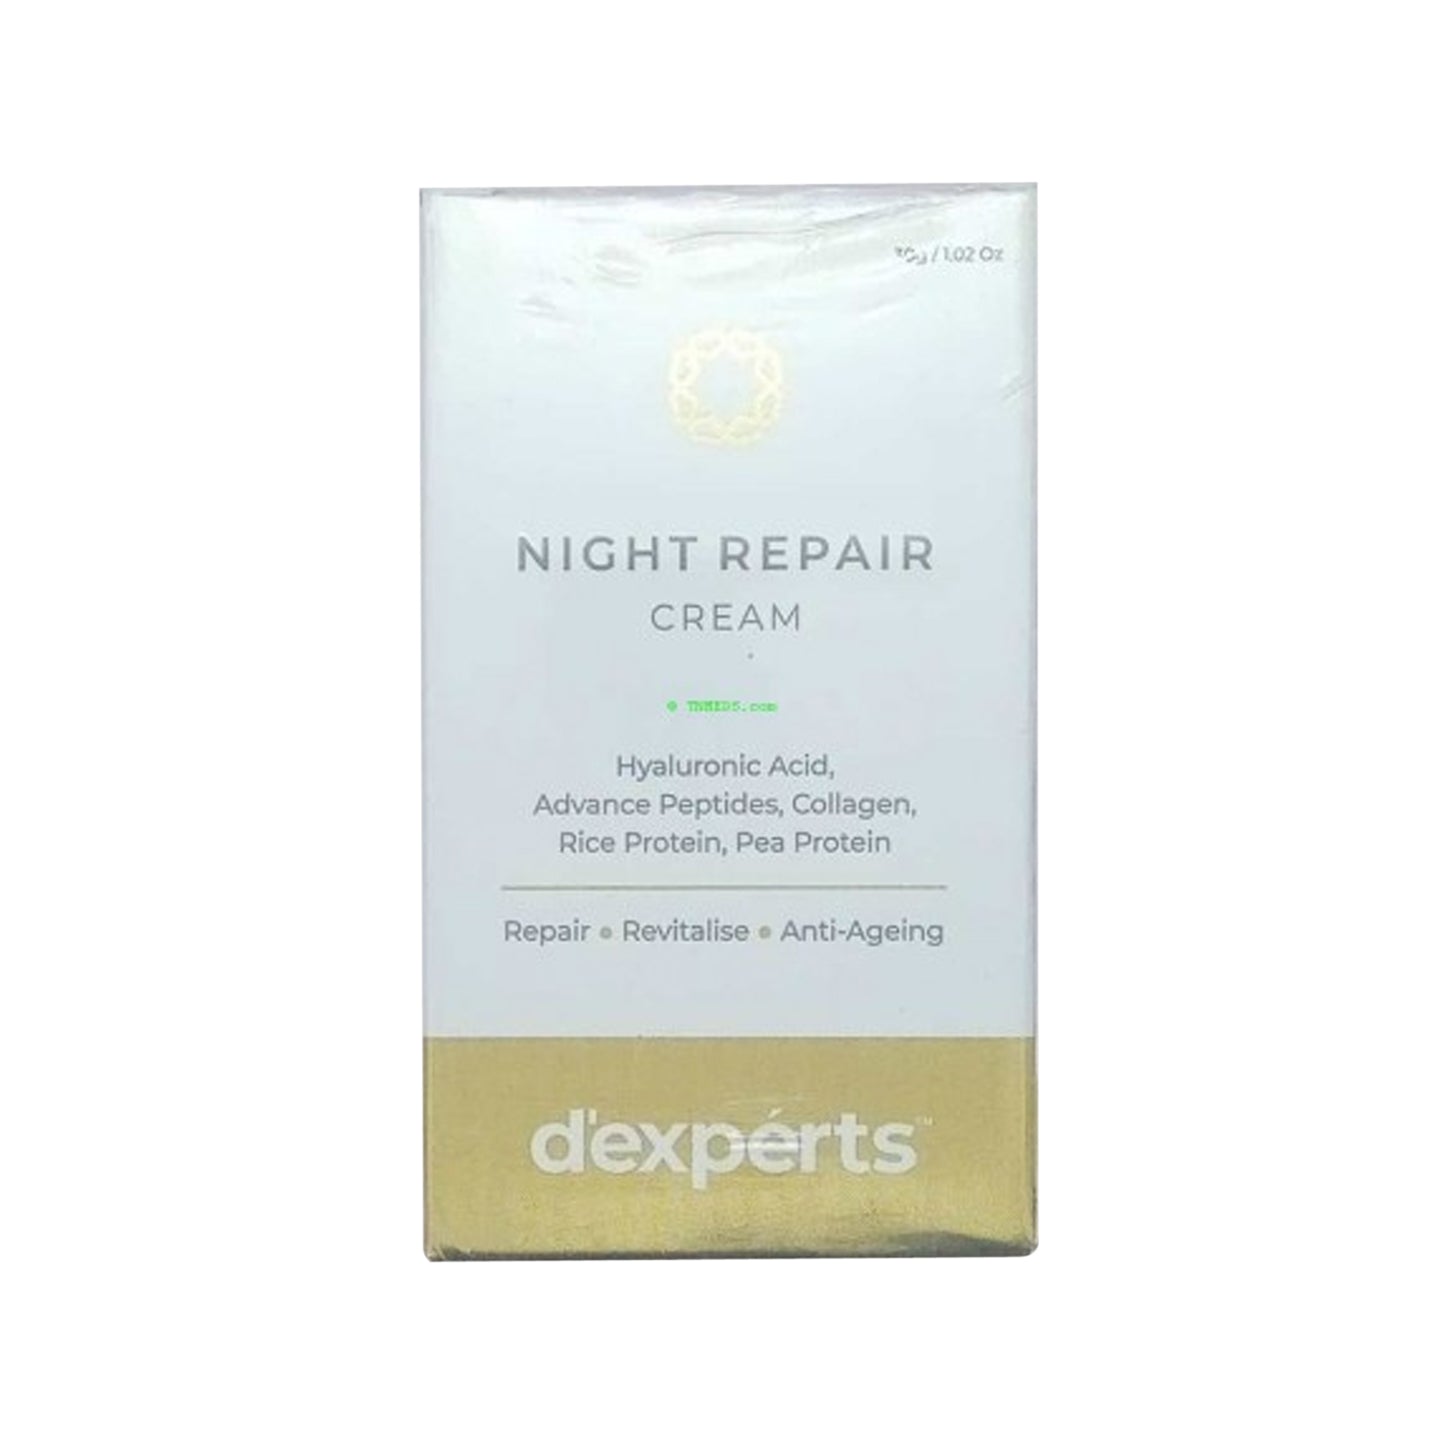 Dexperts Night Repair Cream, 30gm